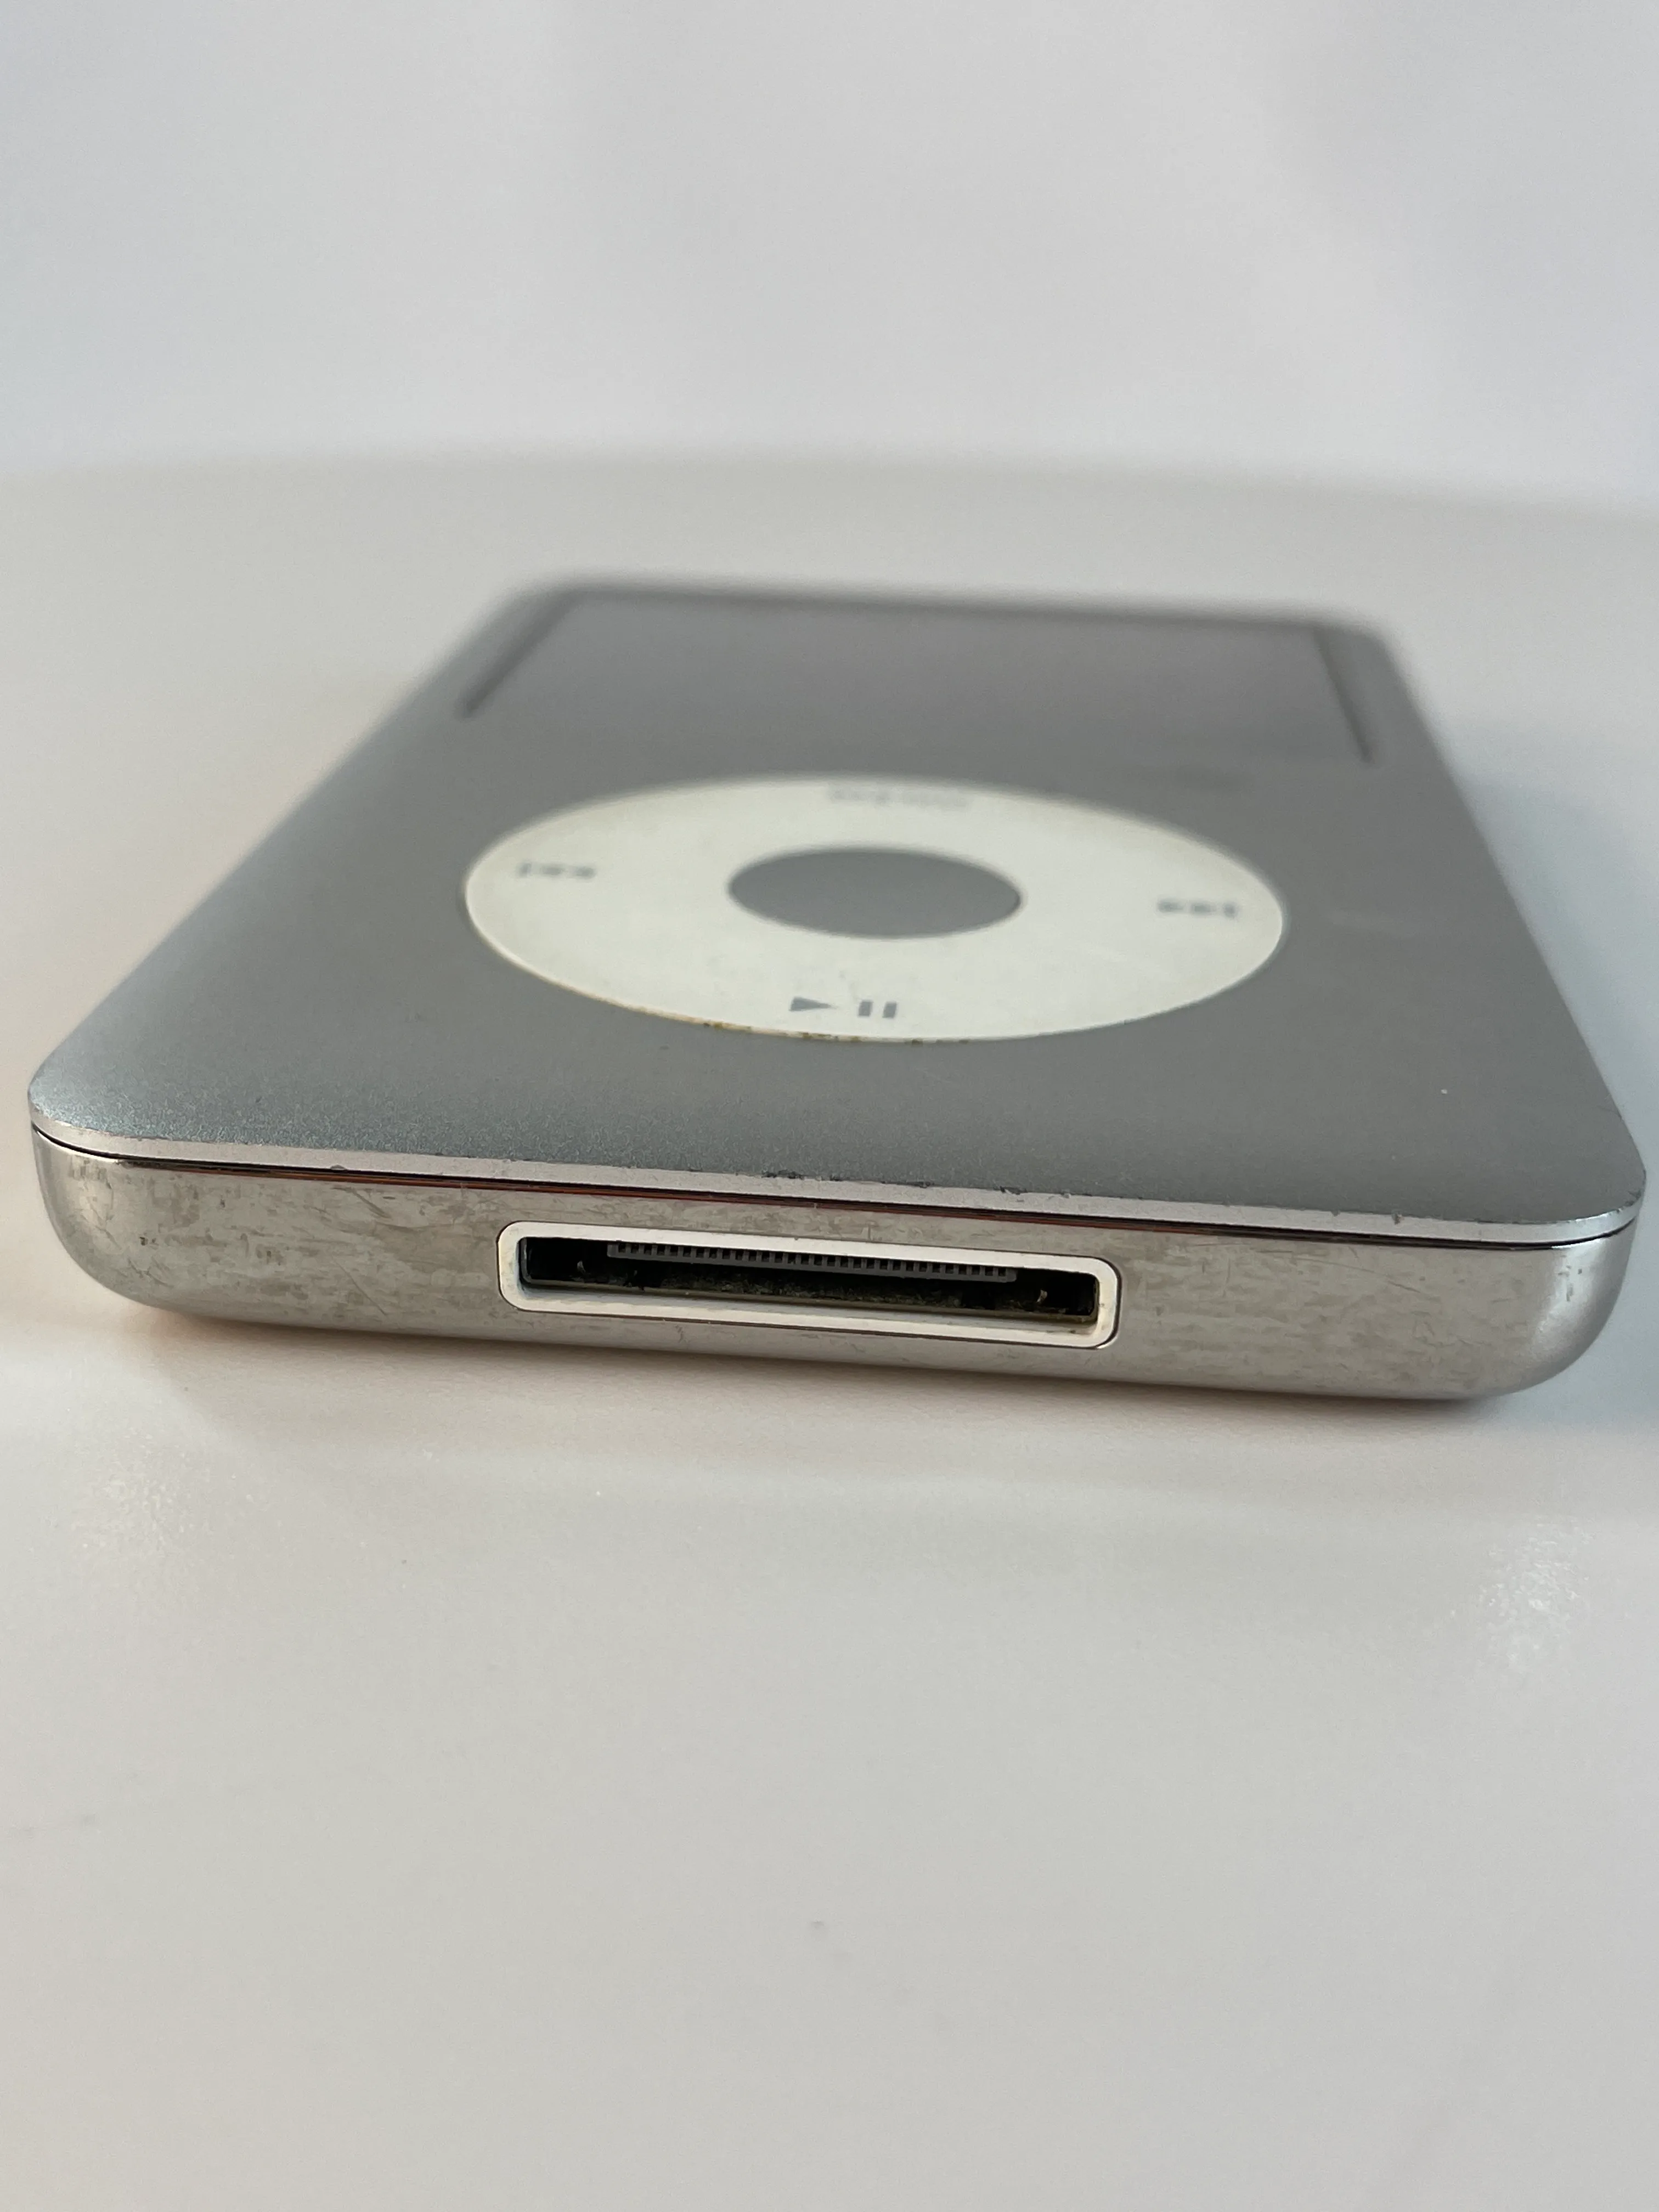 Apple iPod Classic 6th Generation A1238 (Silver - 120 GB) media